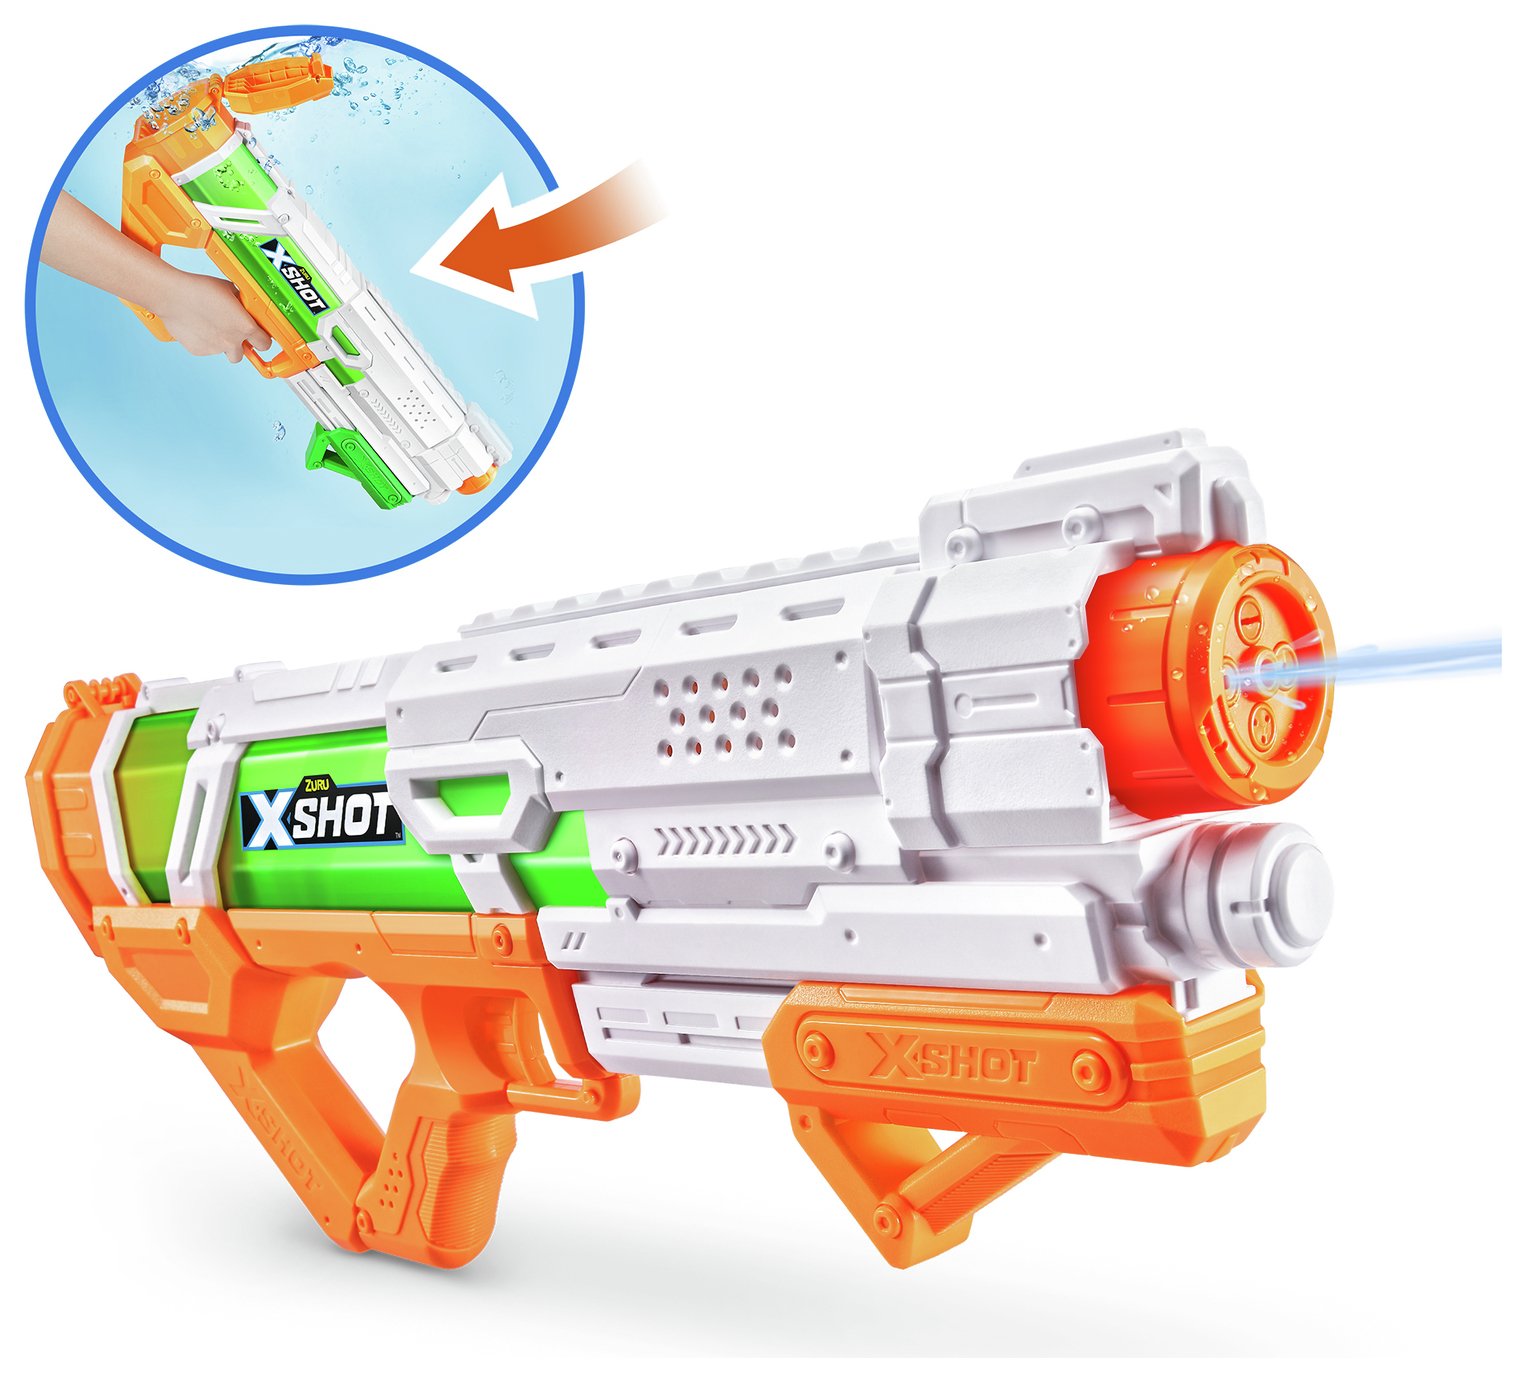 Xshot Epic Fast-Fill Water Gun review